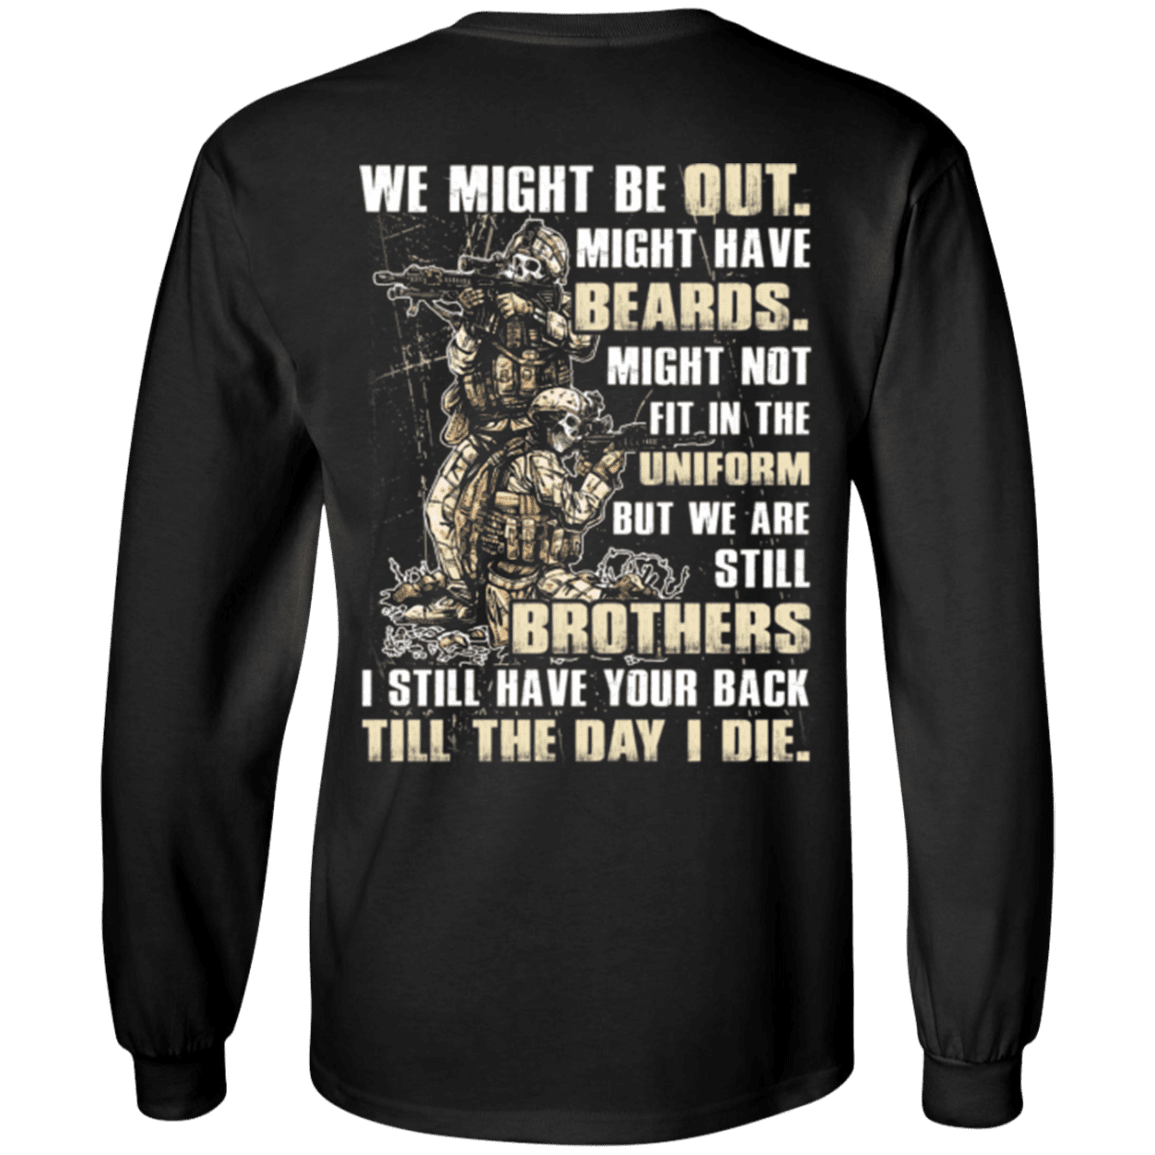 Military T-Shirt "Brothers Till The Day I Die Veteran"-TShirt-General-Veterans Nation